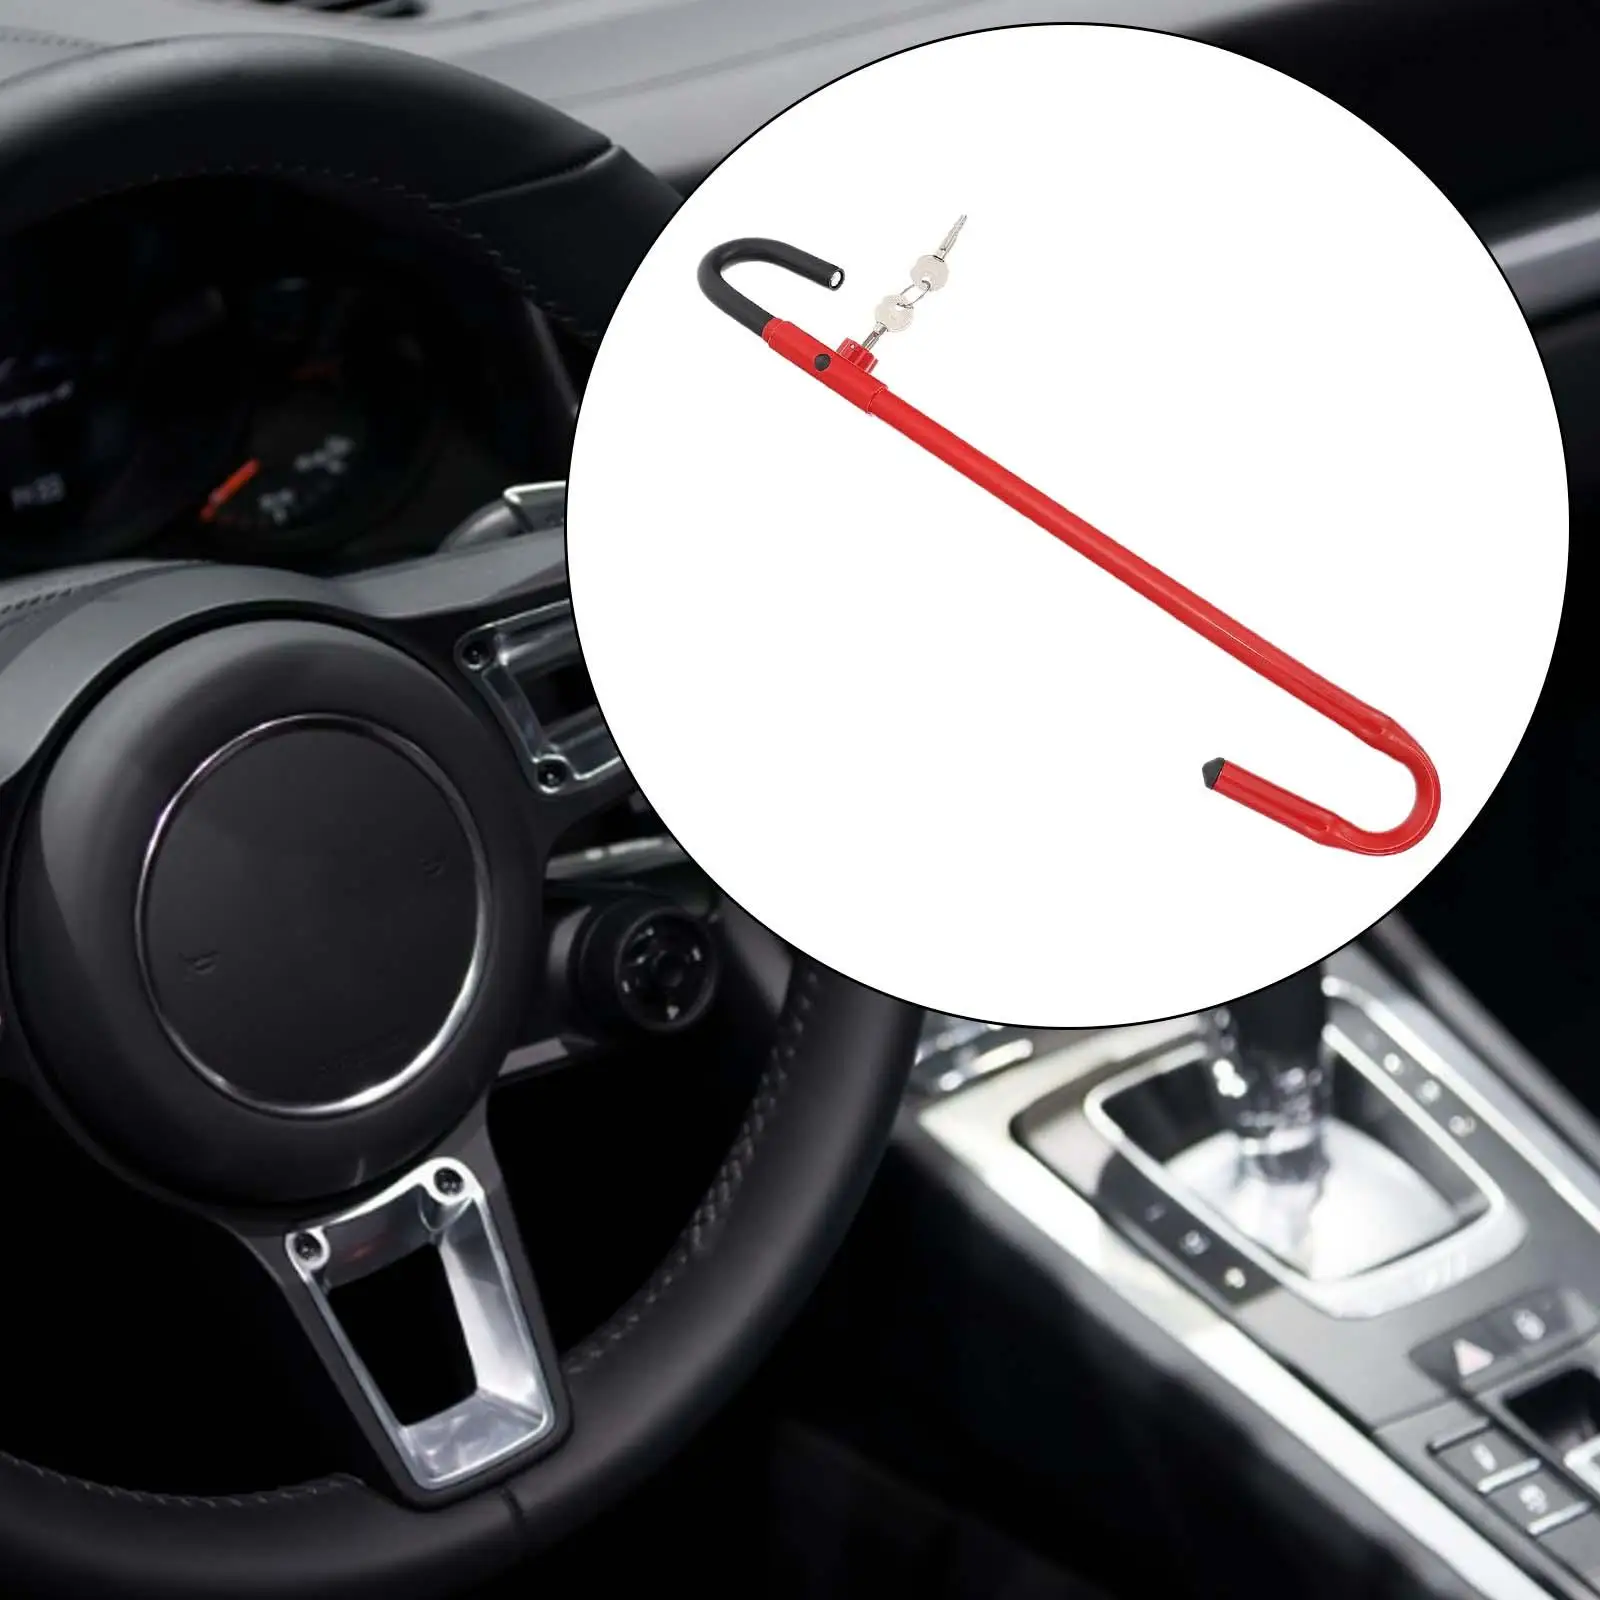 Car Steering Wheel Lock Security Brake Pedal Lock for Automobile Trucks